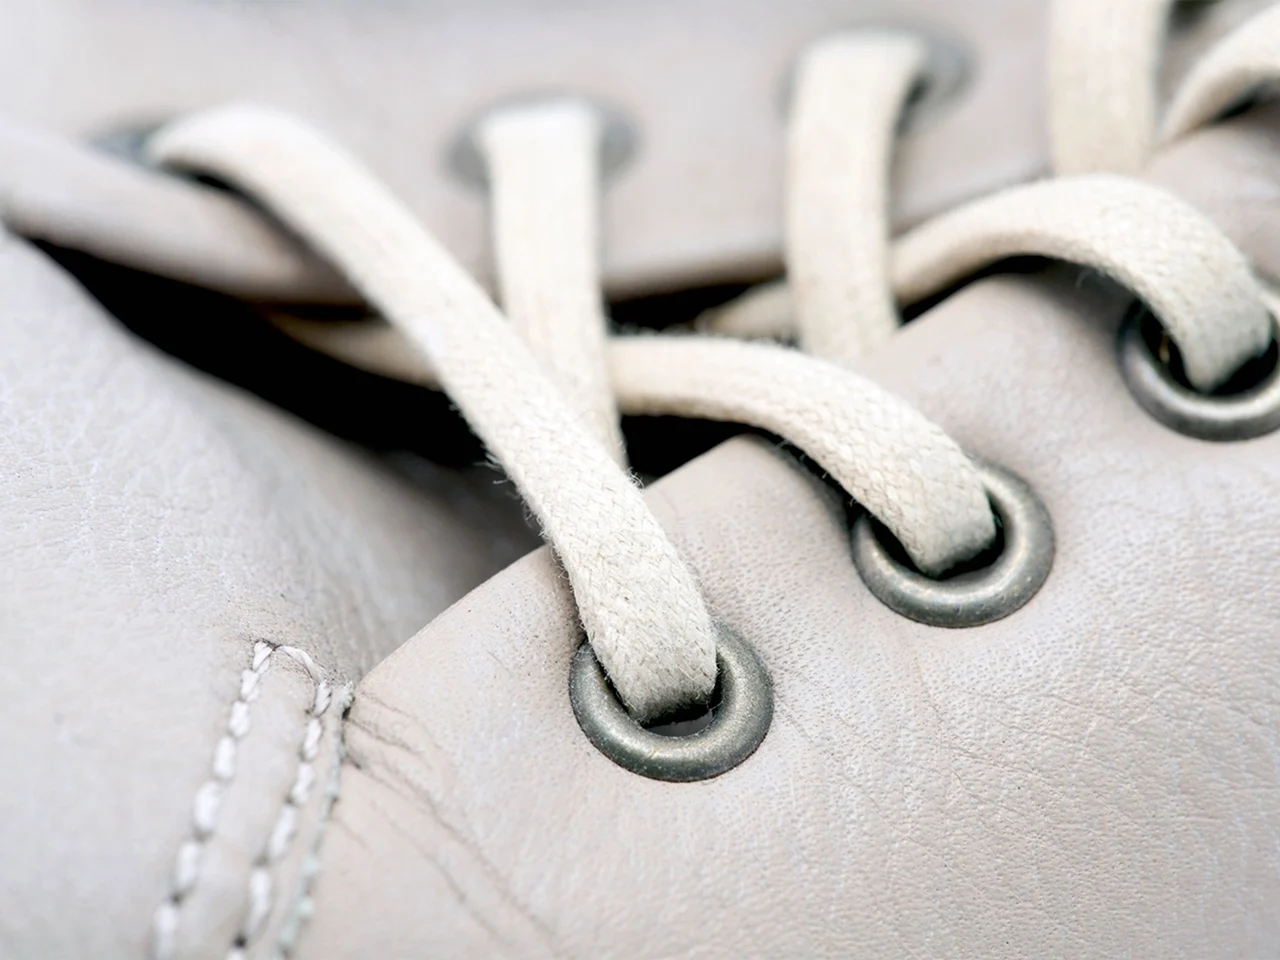 Шнуровка шнурков на Nike a913-6